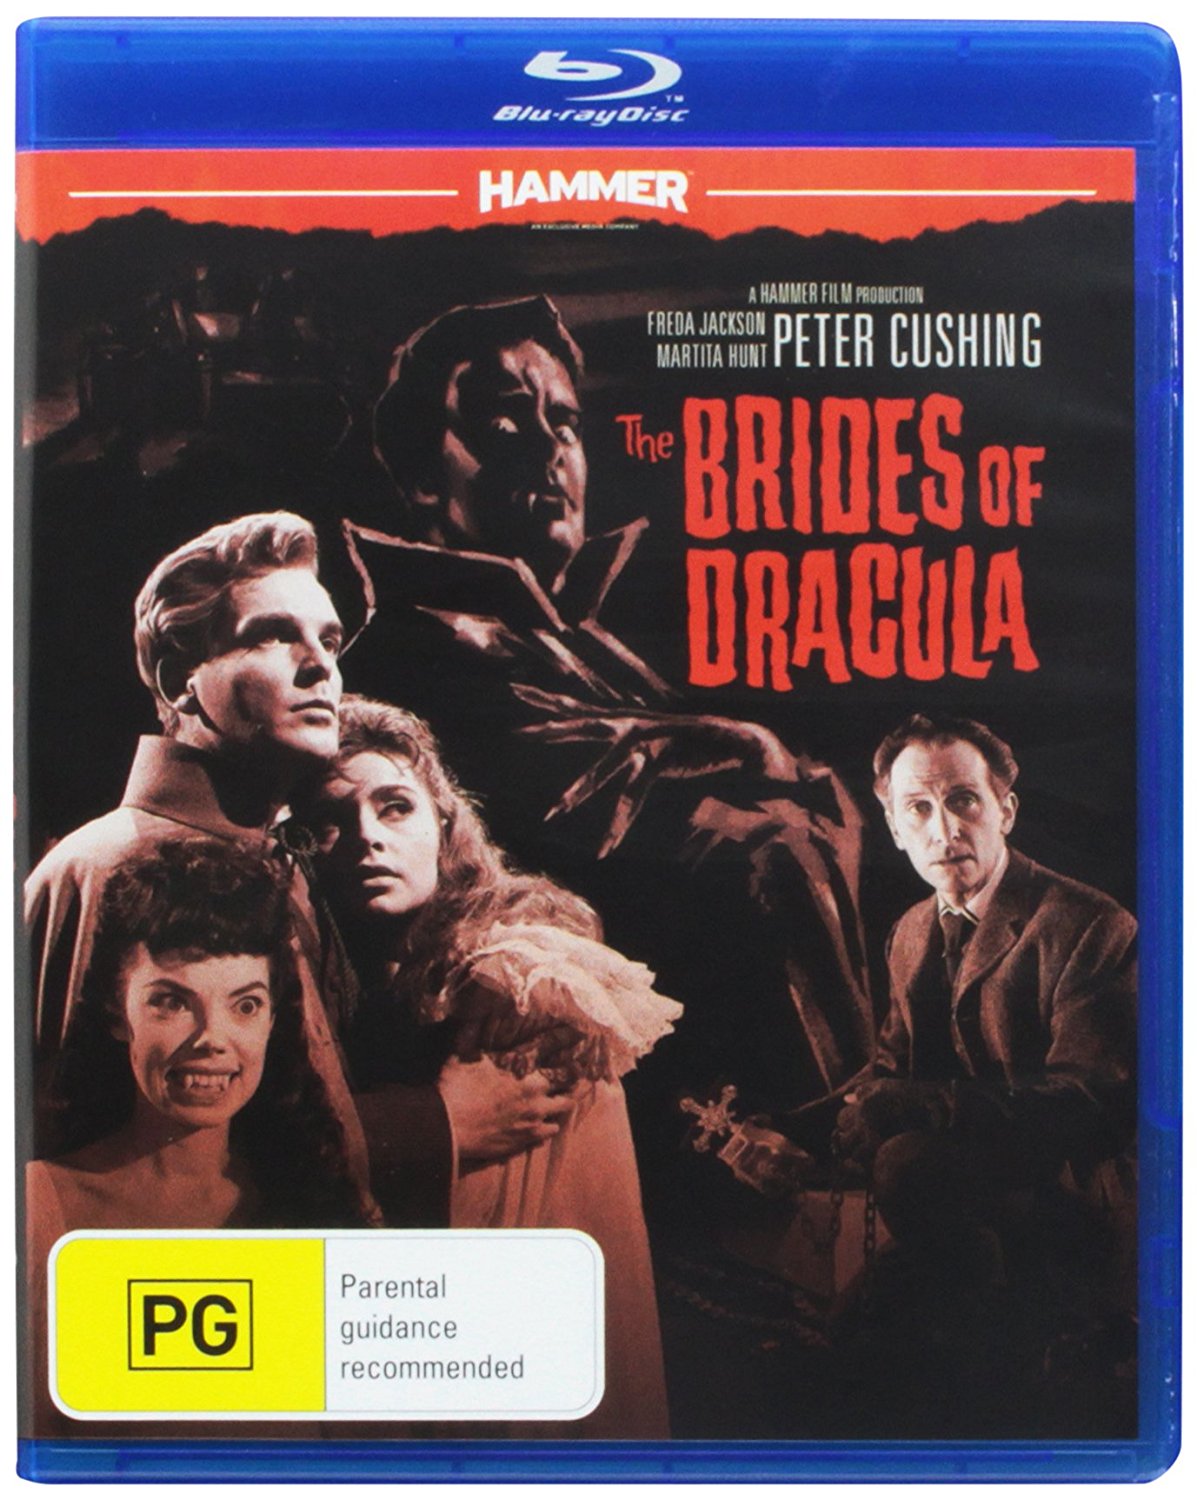 The Brides of Dracula (1960) starring Peter Cushing, David Peel, Martita Hunt, Yvonne Monlaur